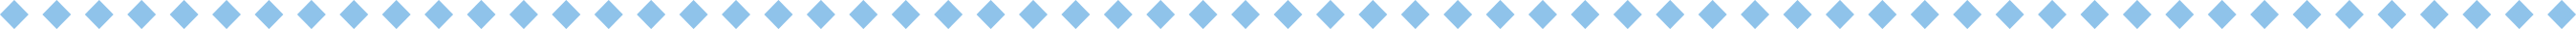 Row-Blue_Diamonds-Graphic